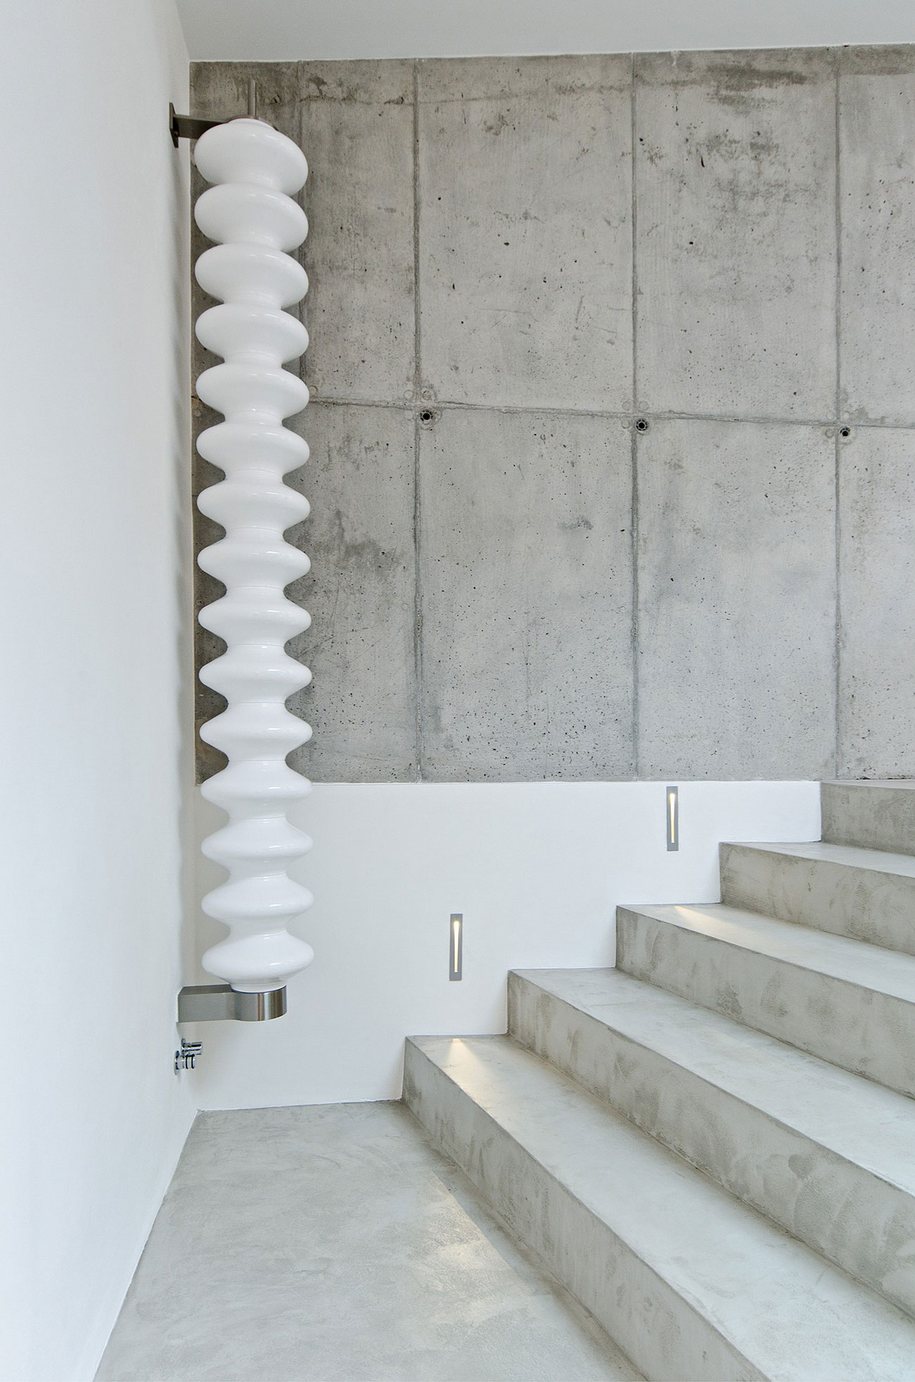 Текстура бетона в дизайне интерьера от OOOOX